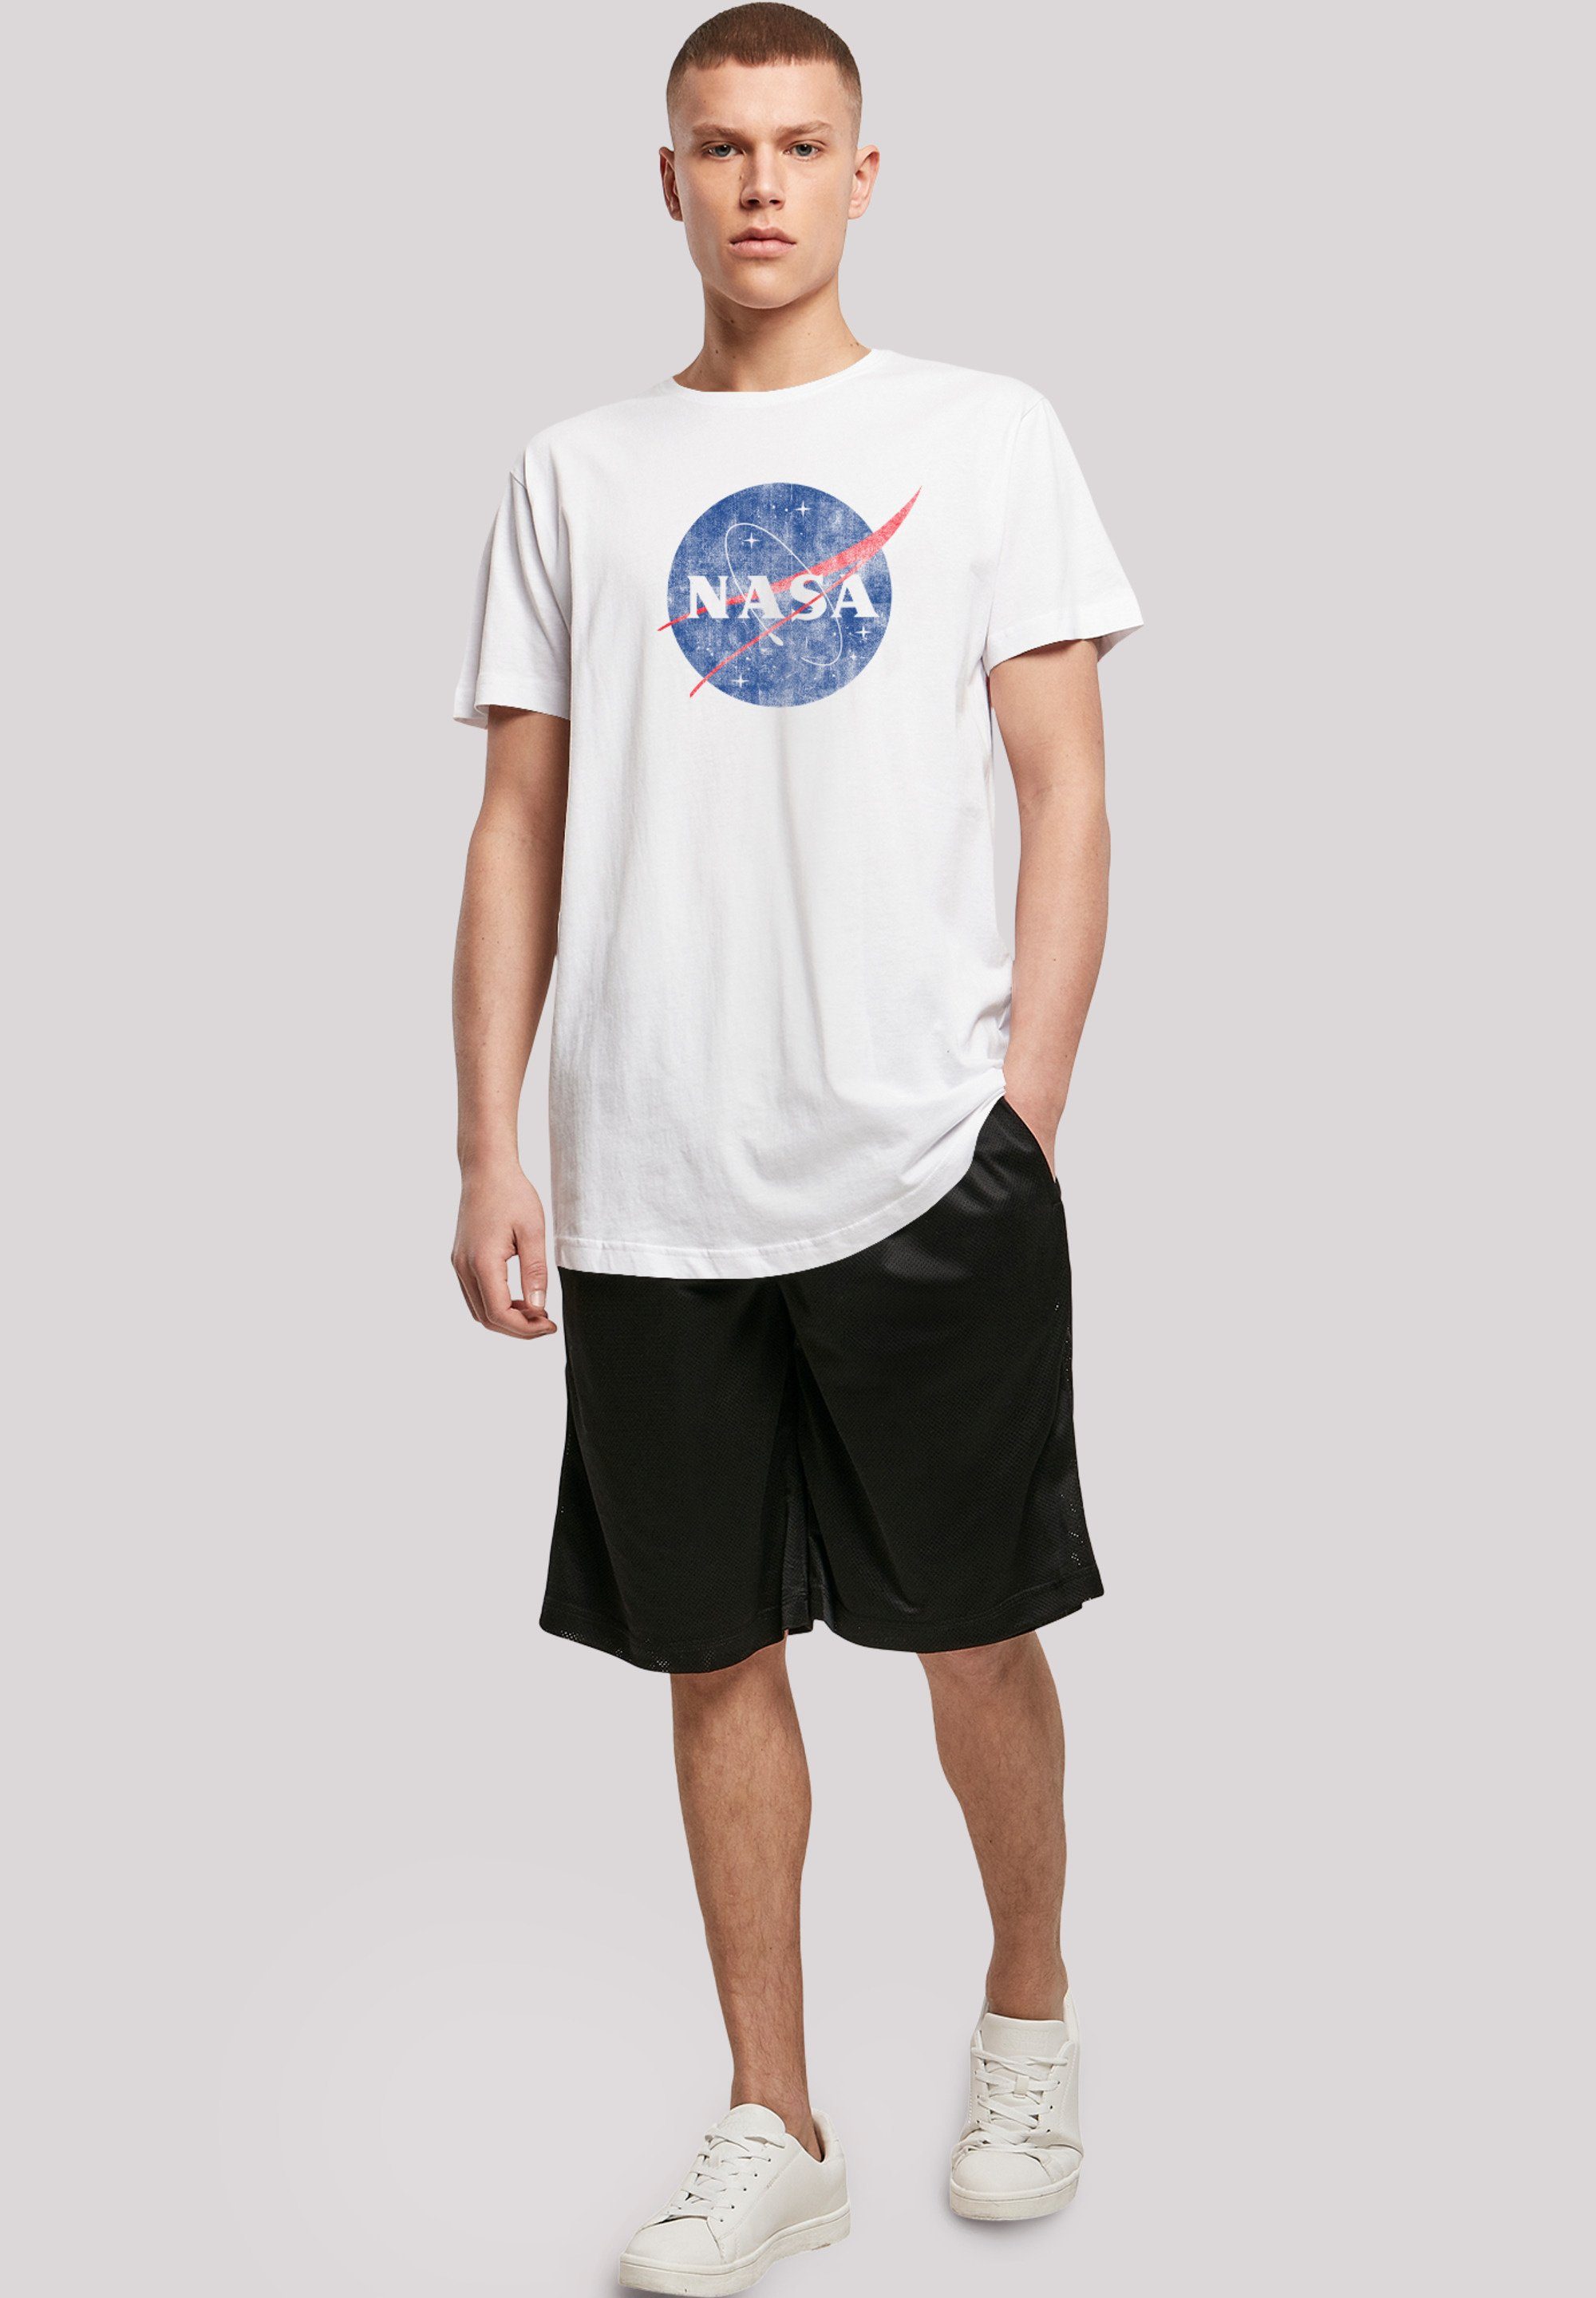 Cut Long F4NT4STIC Logo Distressed' 'NASA T-Shirt Print Insignia T-Shirt Classic